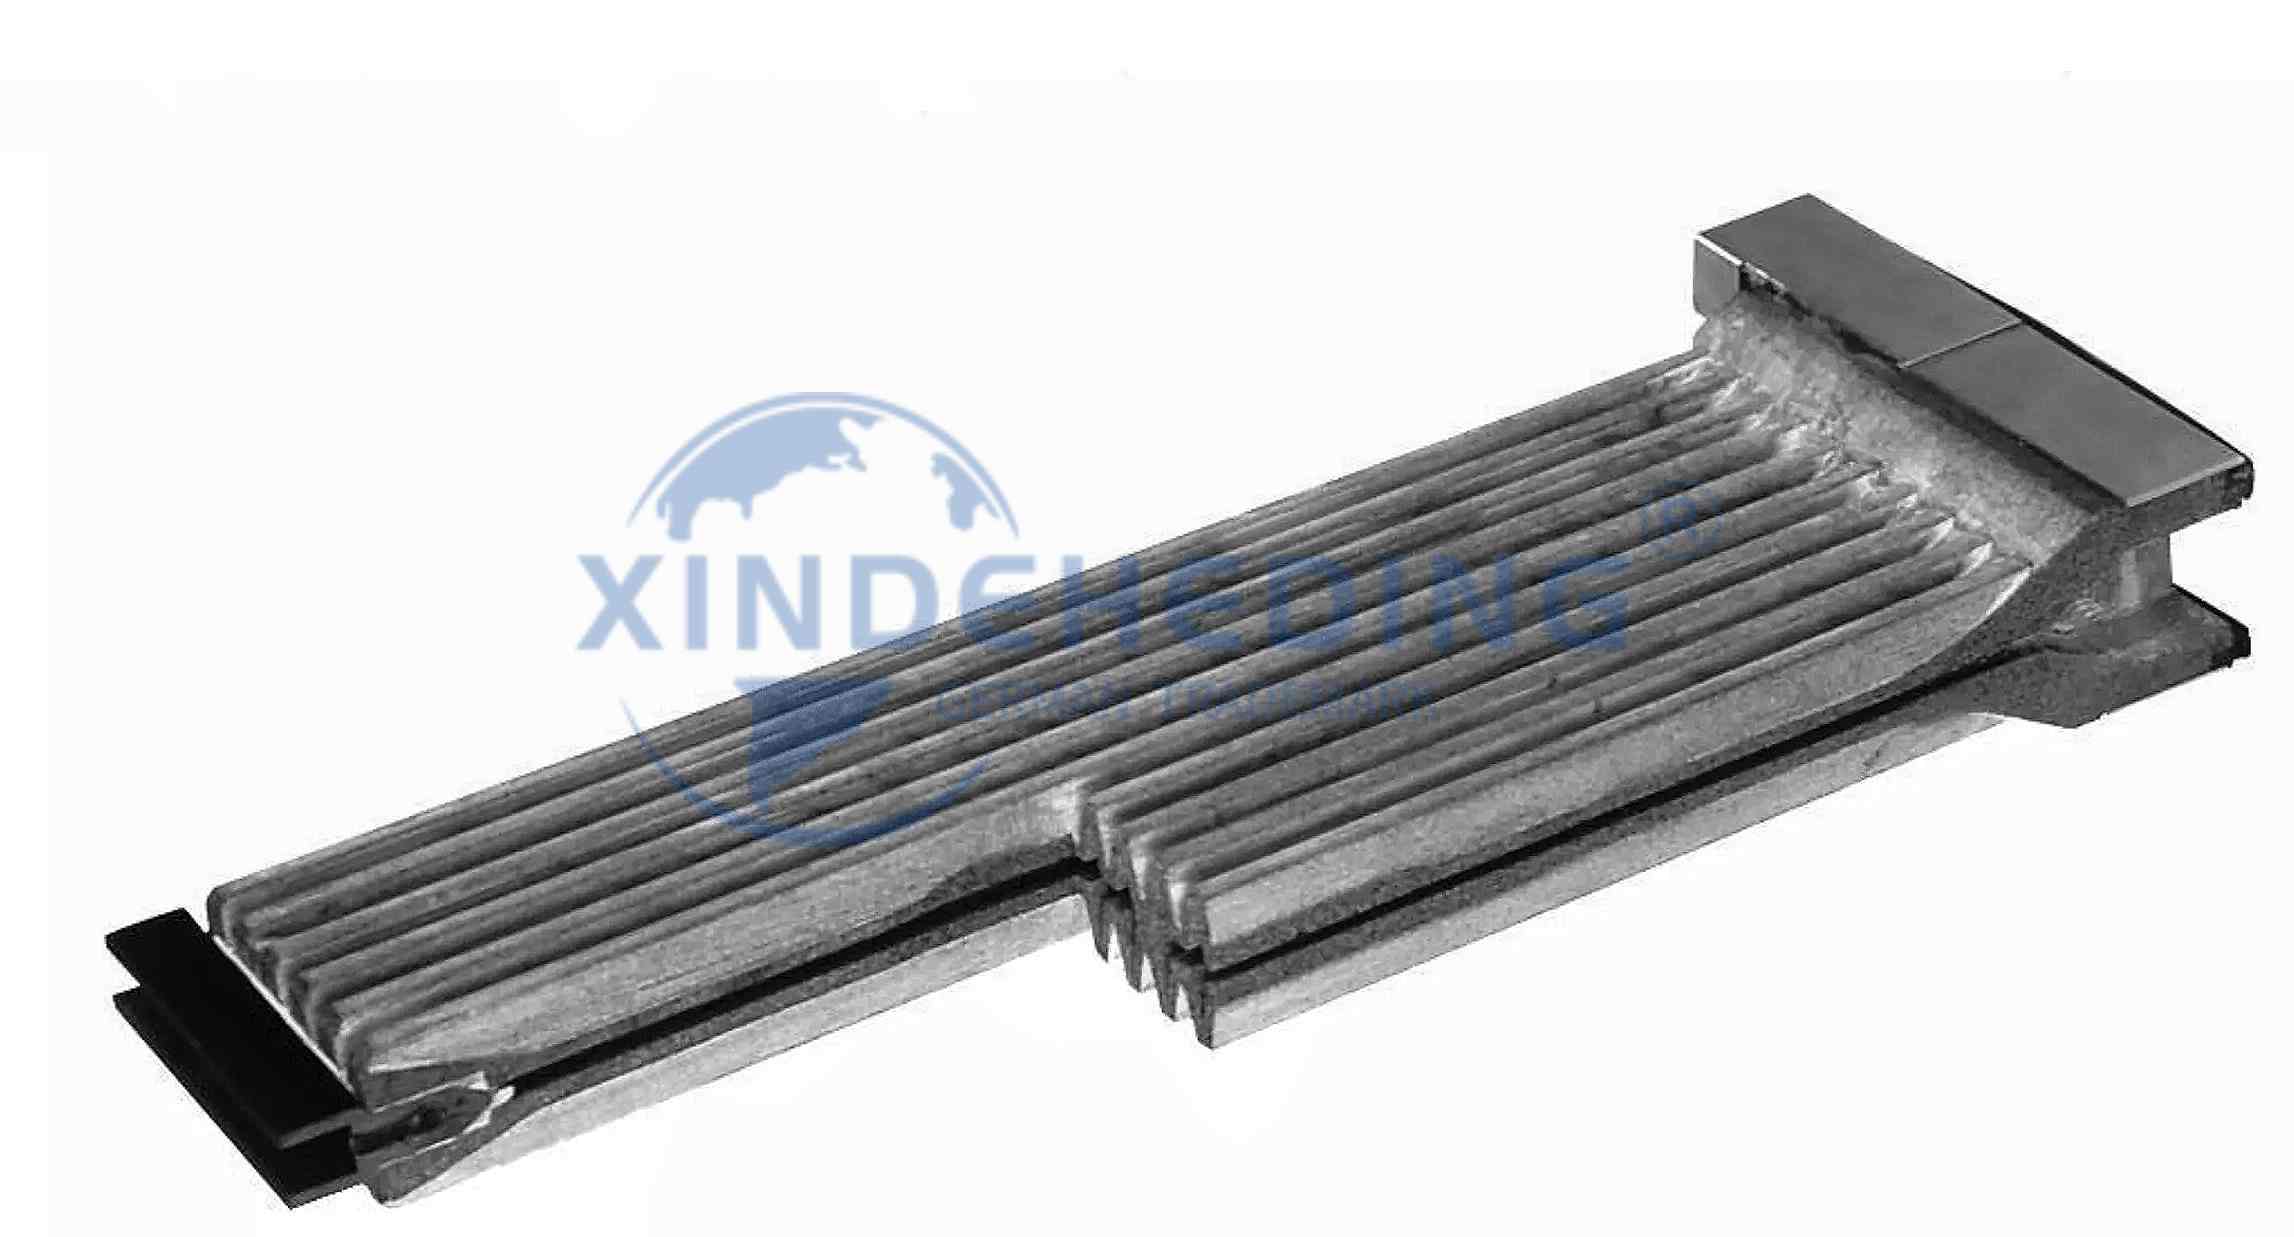 Sinter Plate (XDHD)-Replacement for DELTA²-Sinter Plate-Sinter Plate Filter-Sinter Plate Filter Media-Herding Sinter Plate Filterr